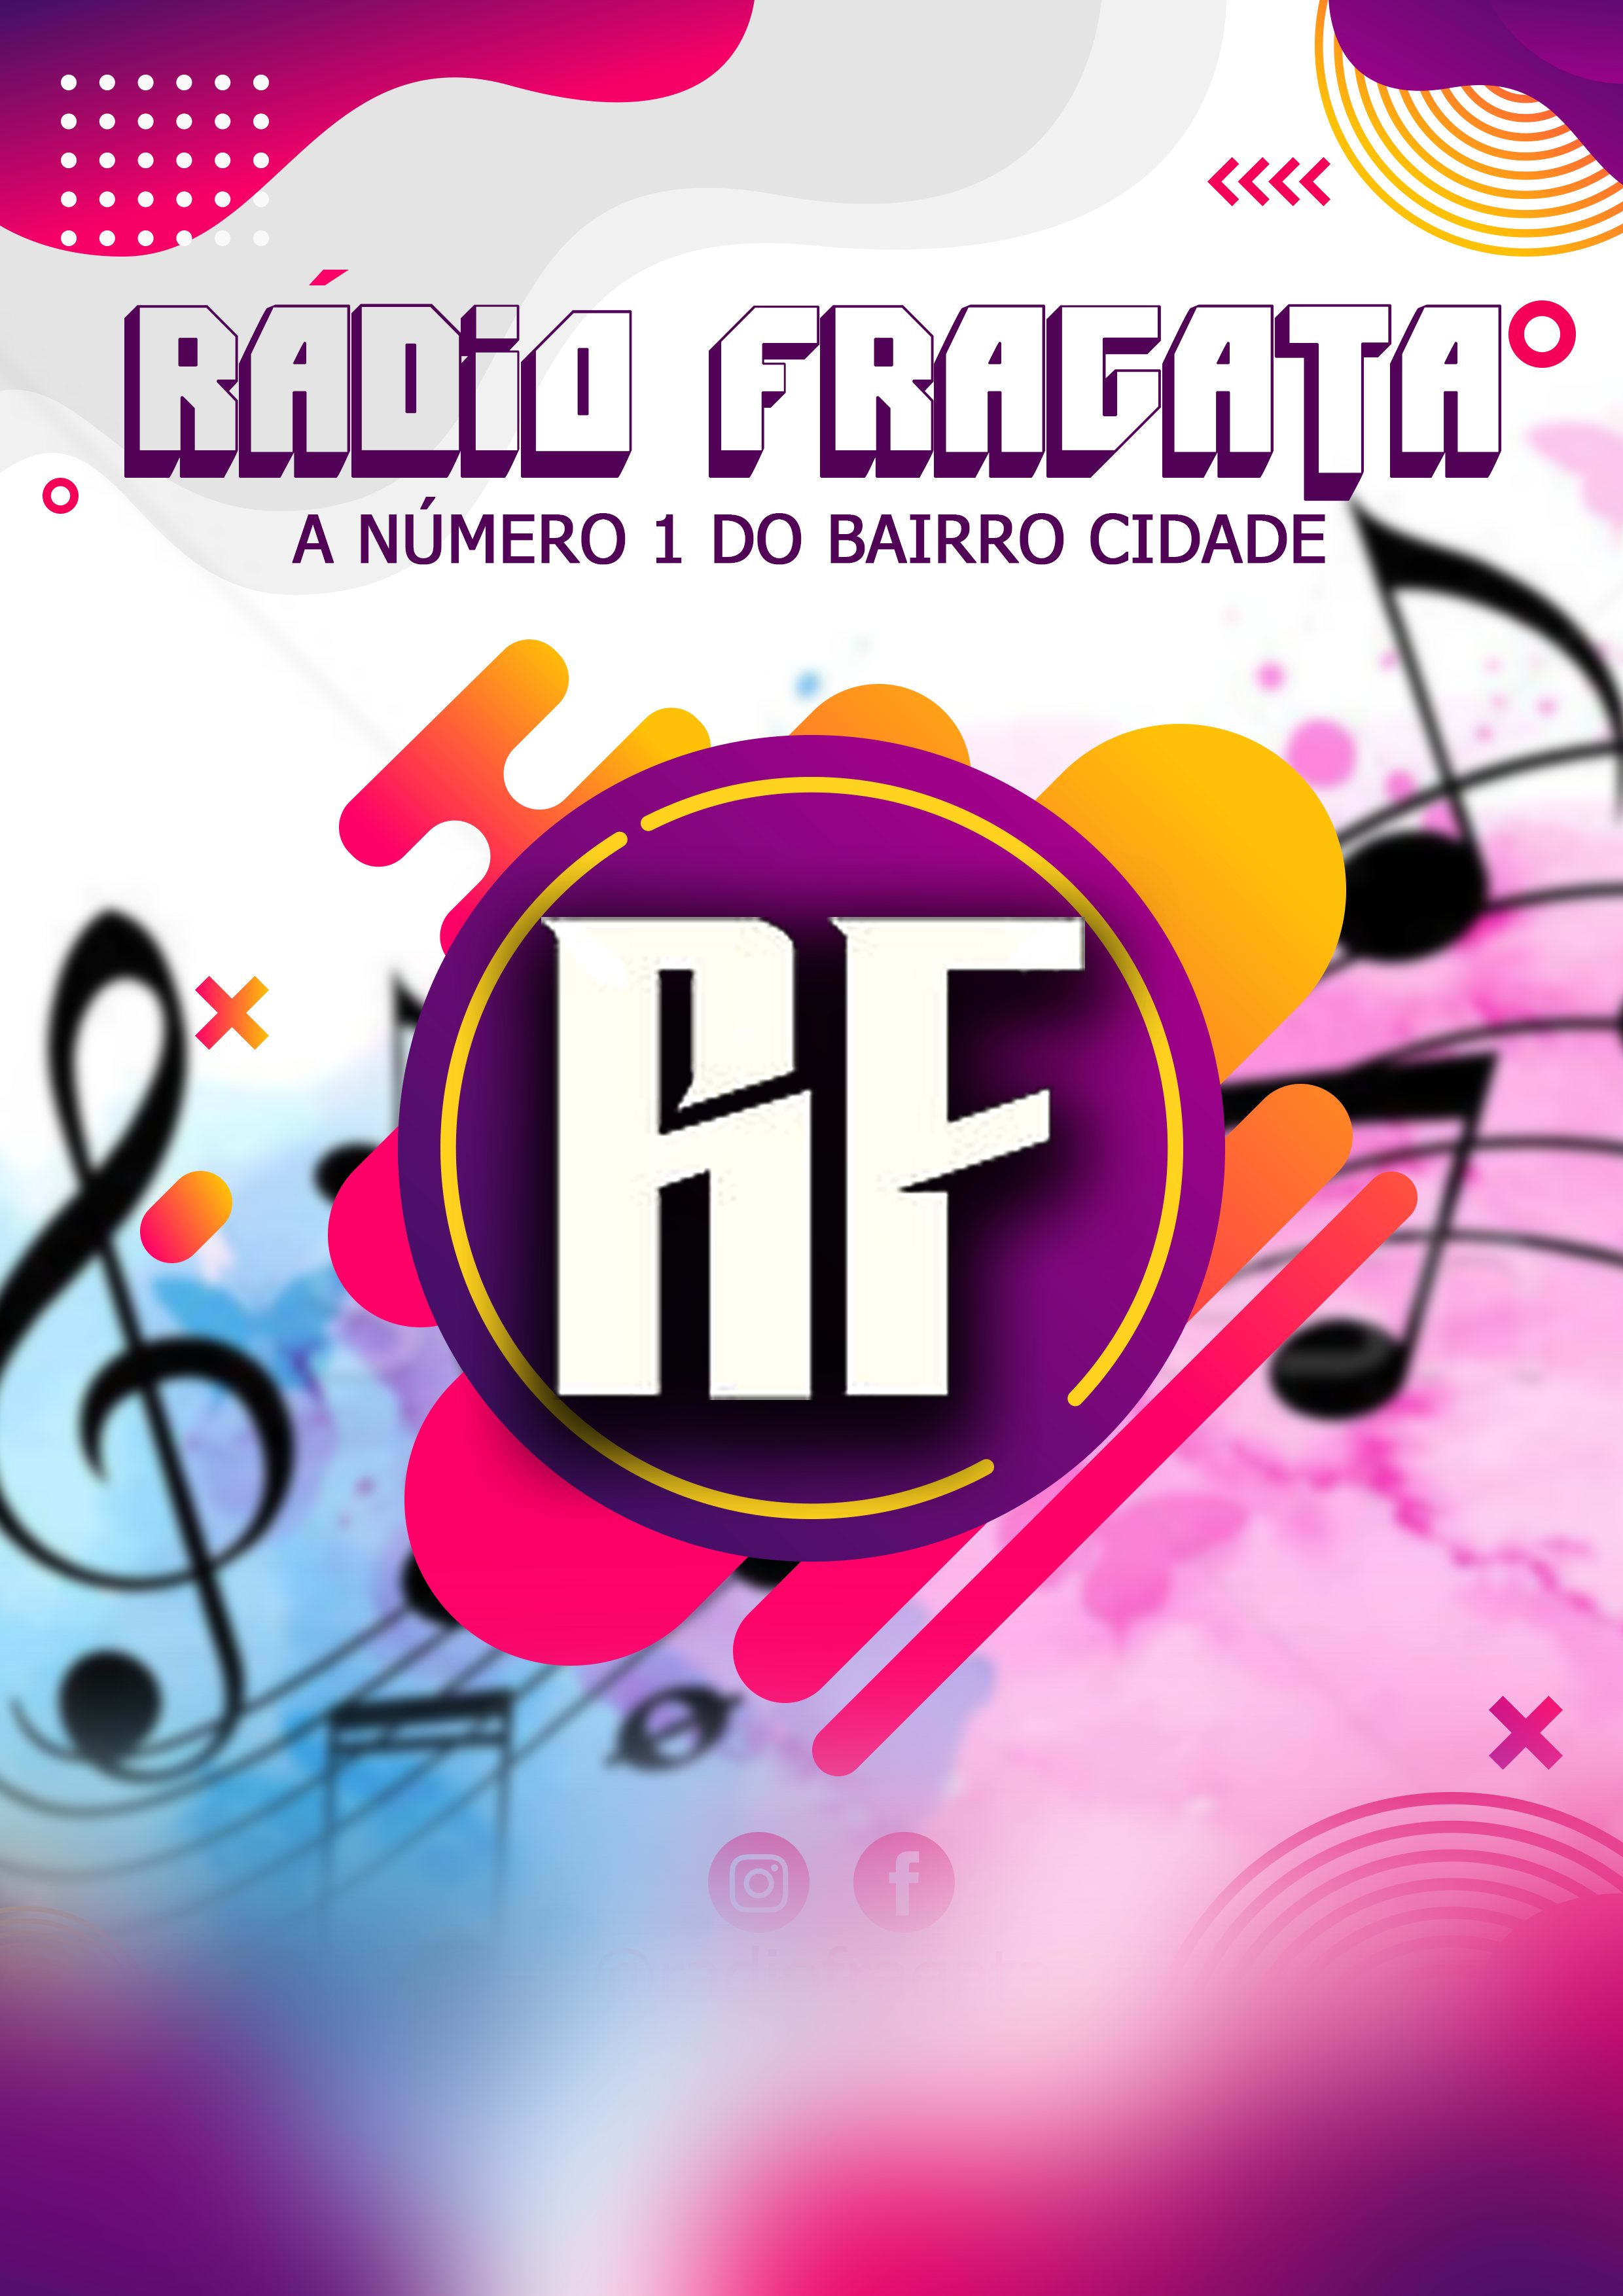 Radio Fragata